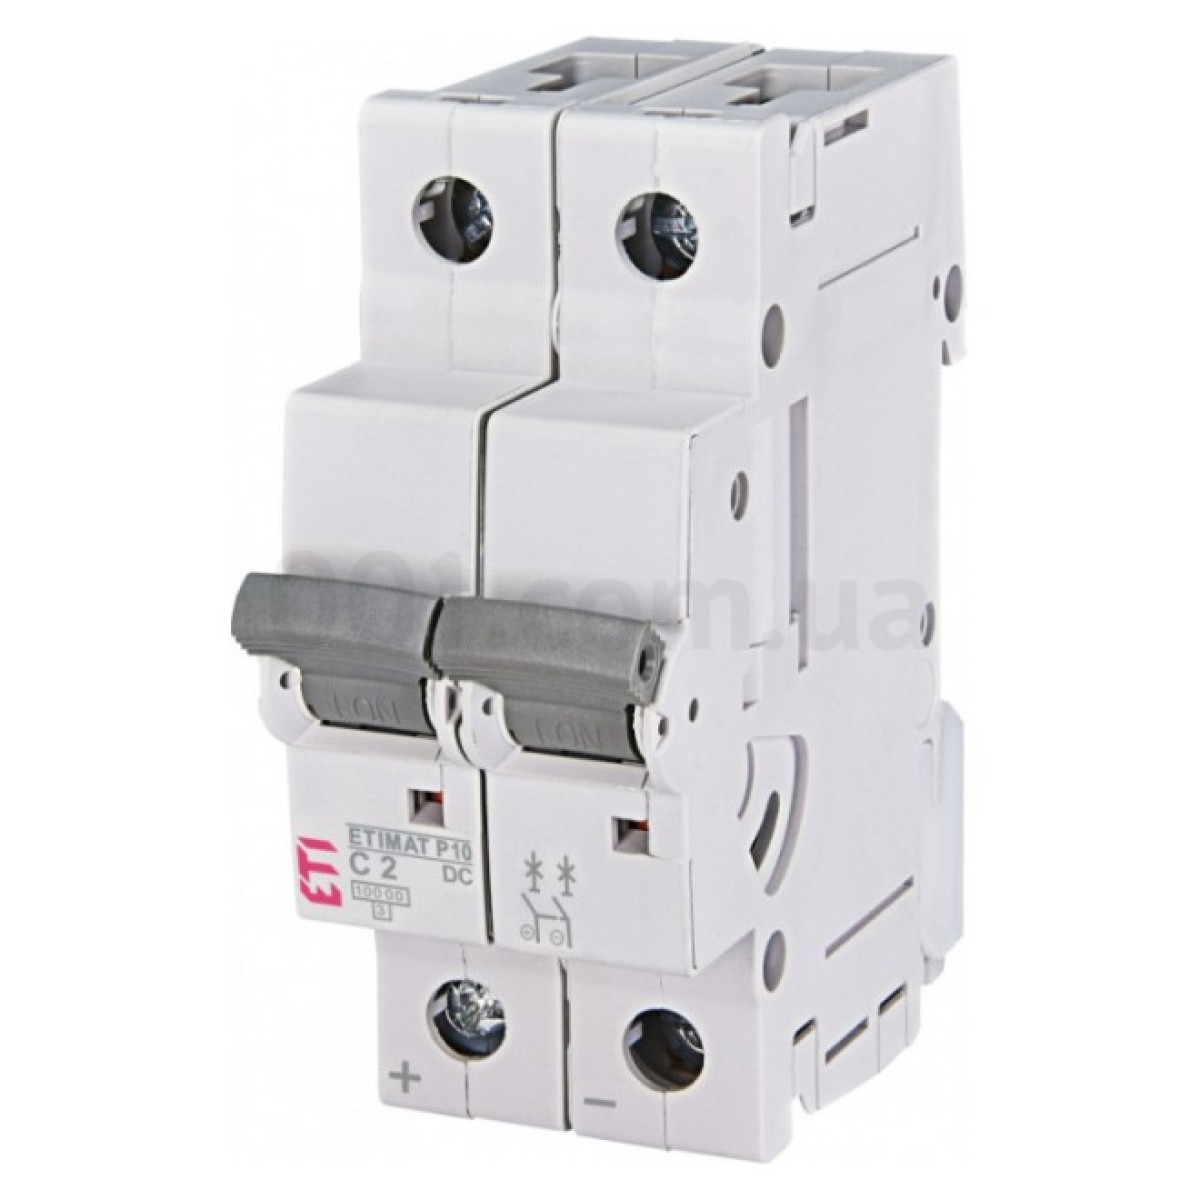 Автоматичний вимикач ETIMAT P10 DC (10кА) 2P 2 А хар-ка C, ETI 98_98.jpg - фото 1